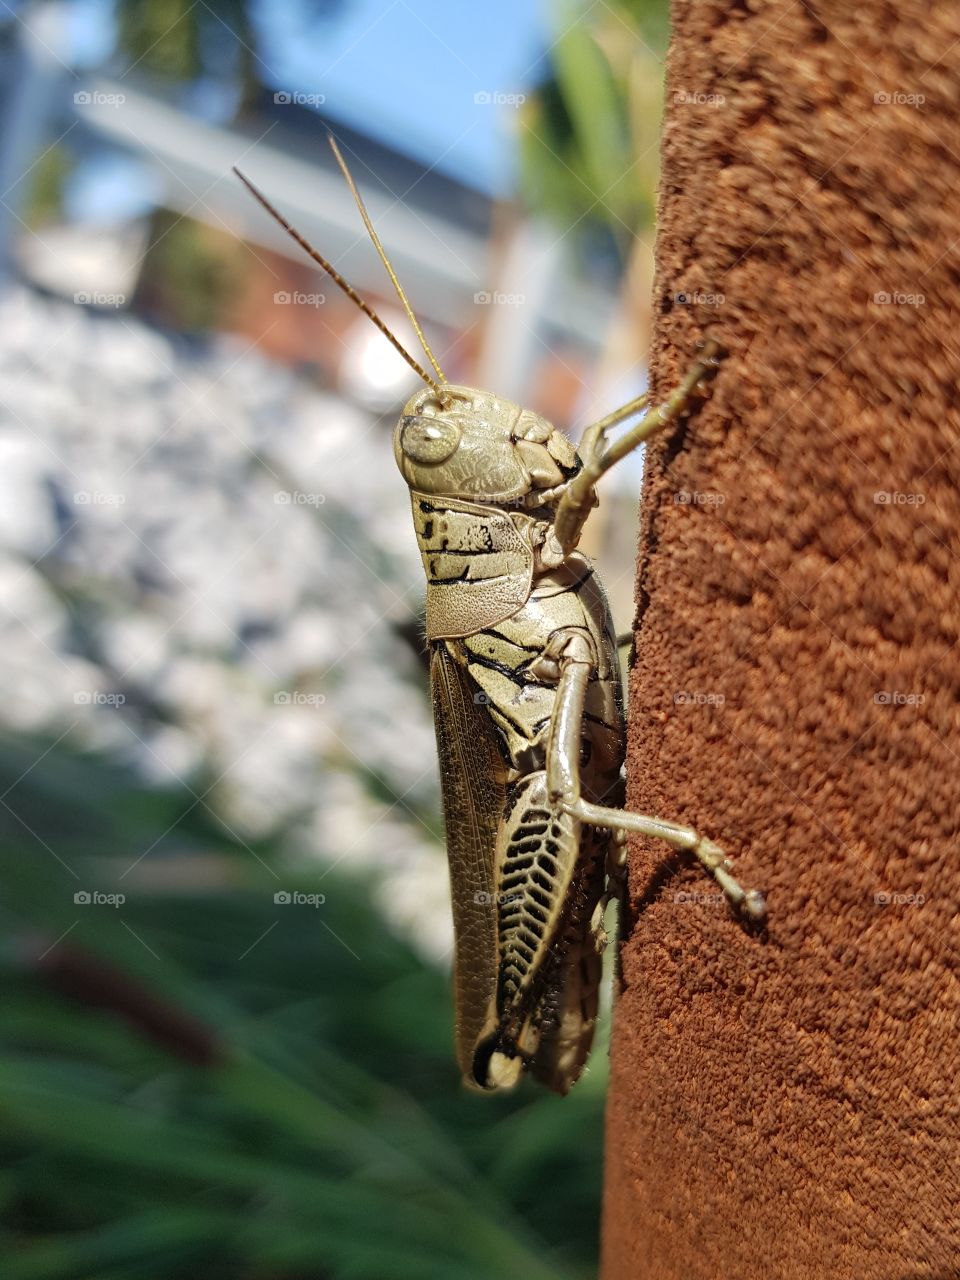 Grasshopper in detail